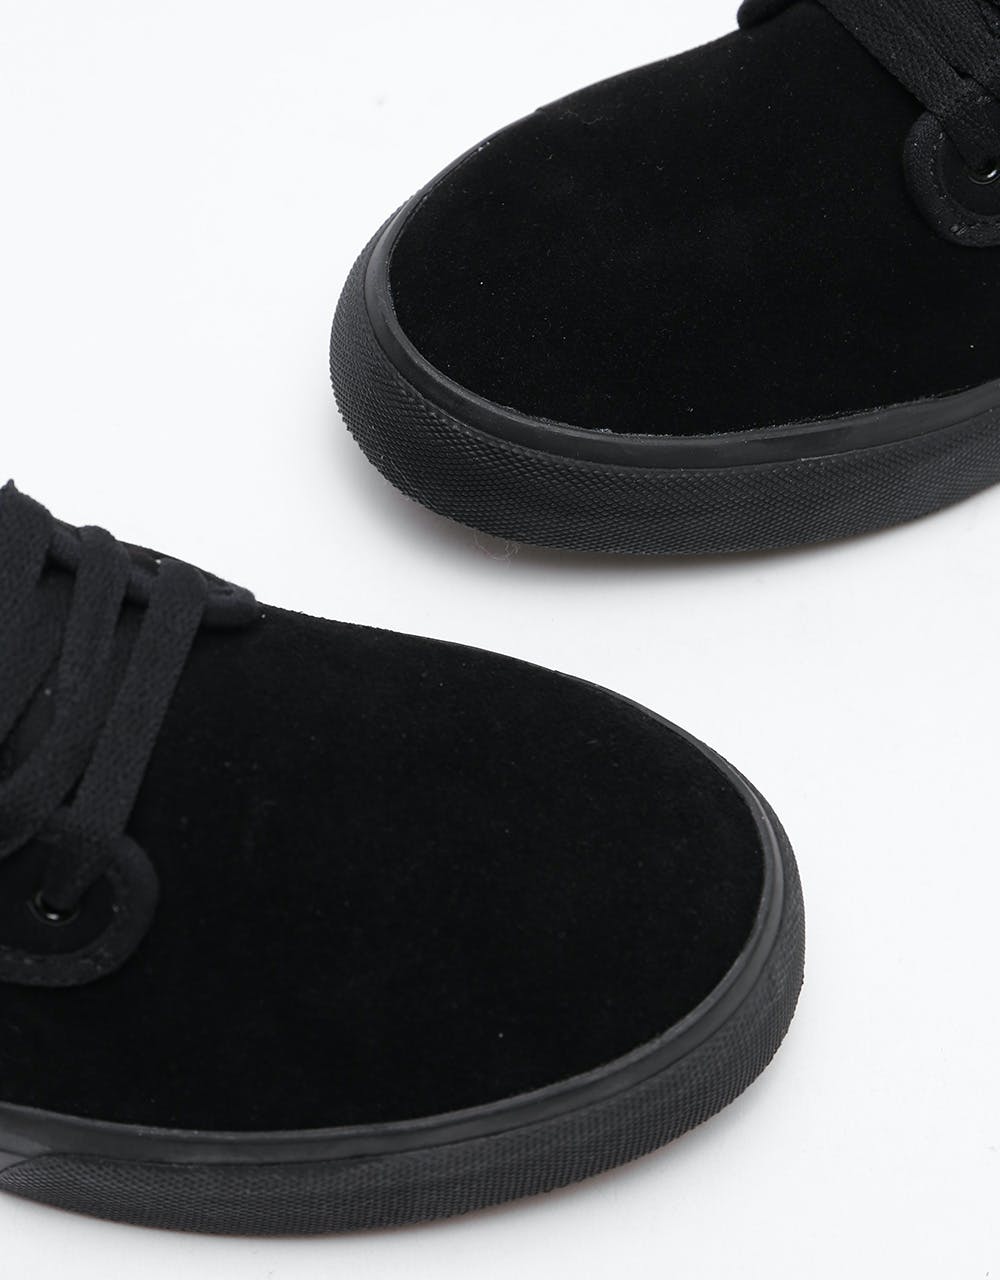 Emerica Wino Standard Skate Shoes - Black/Black